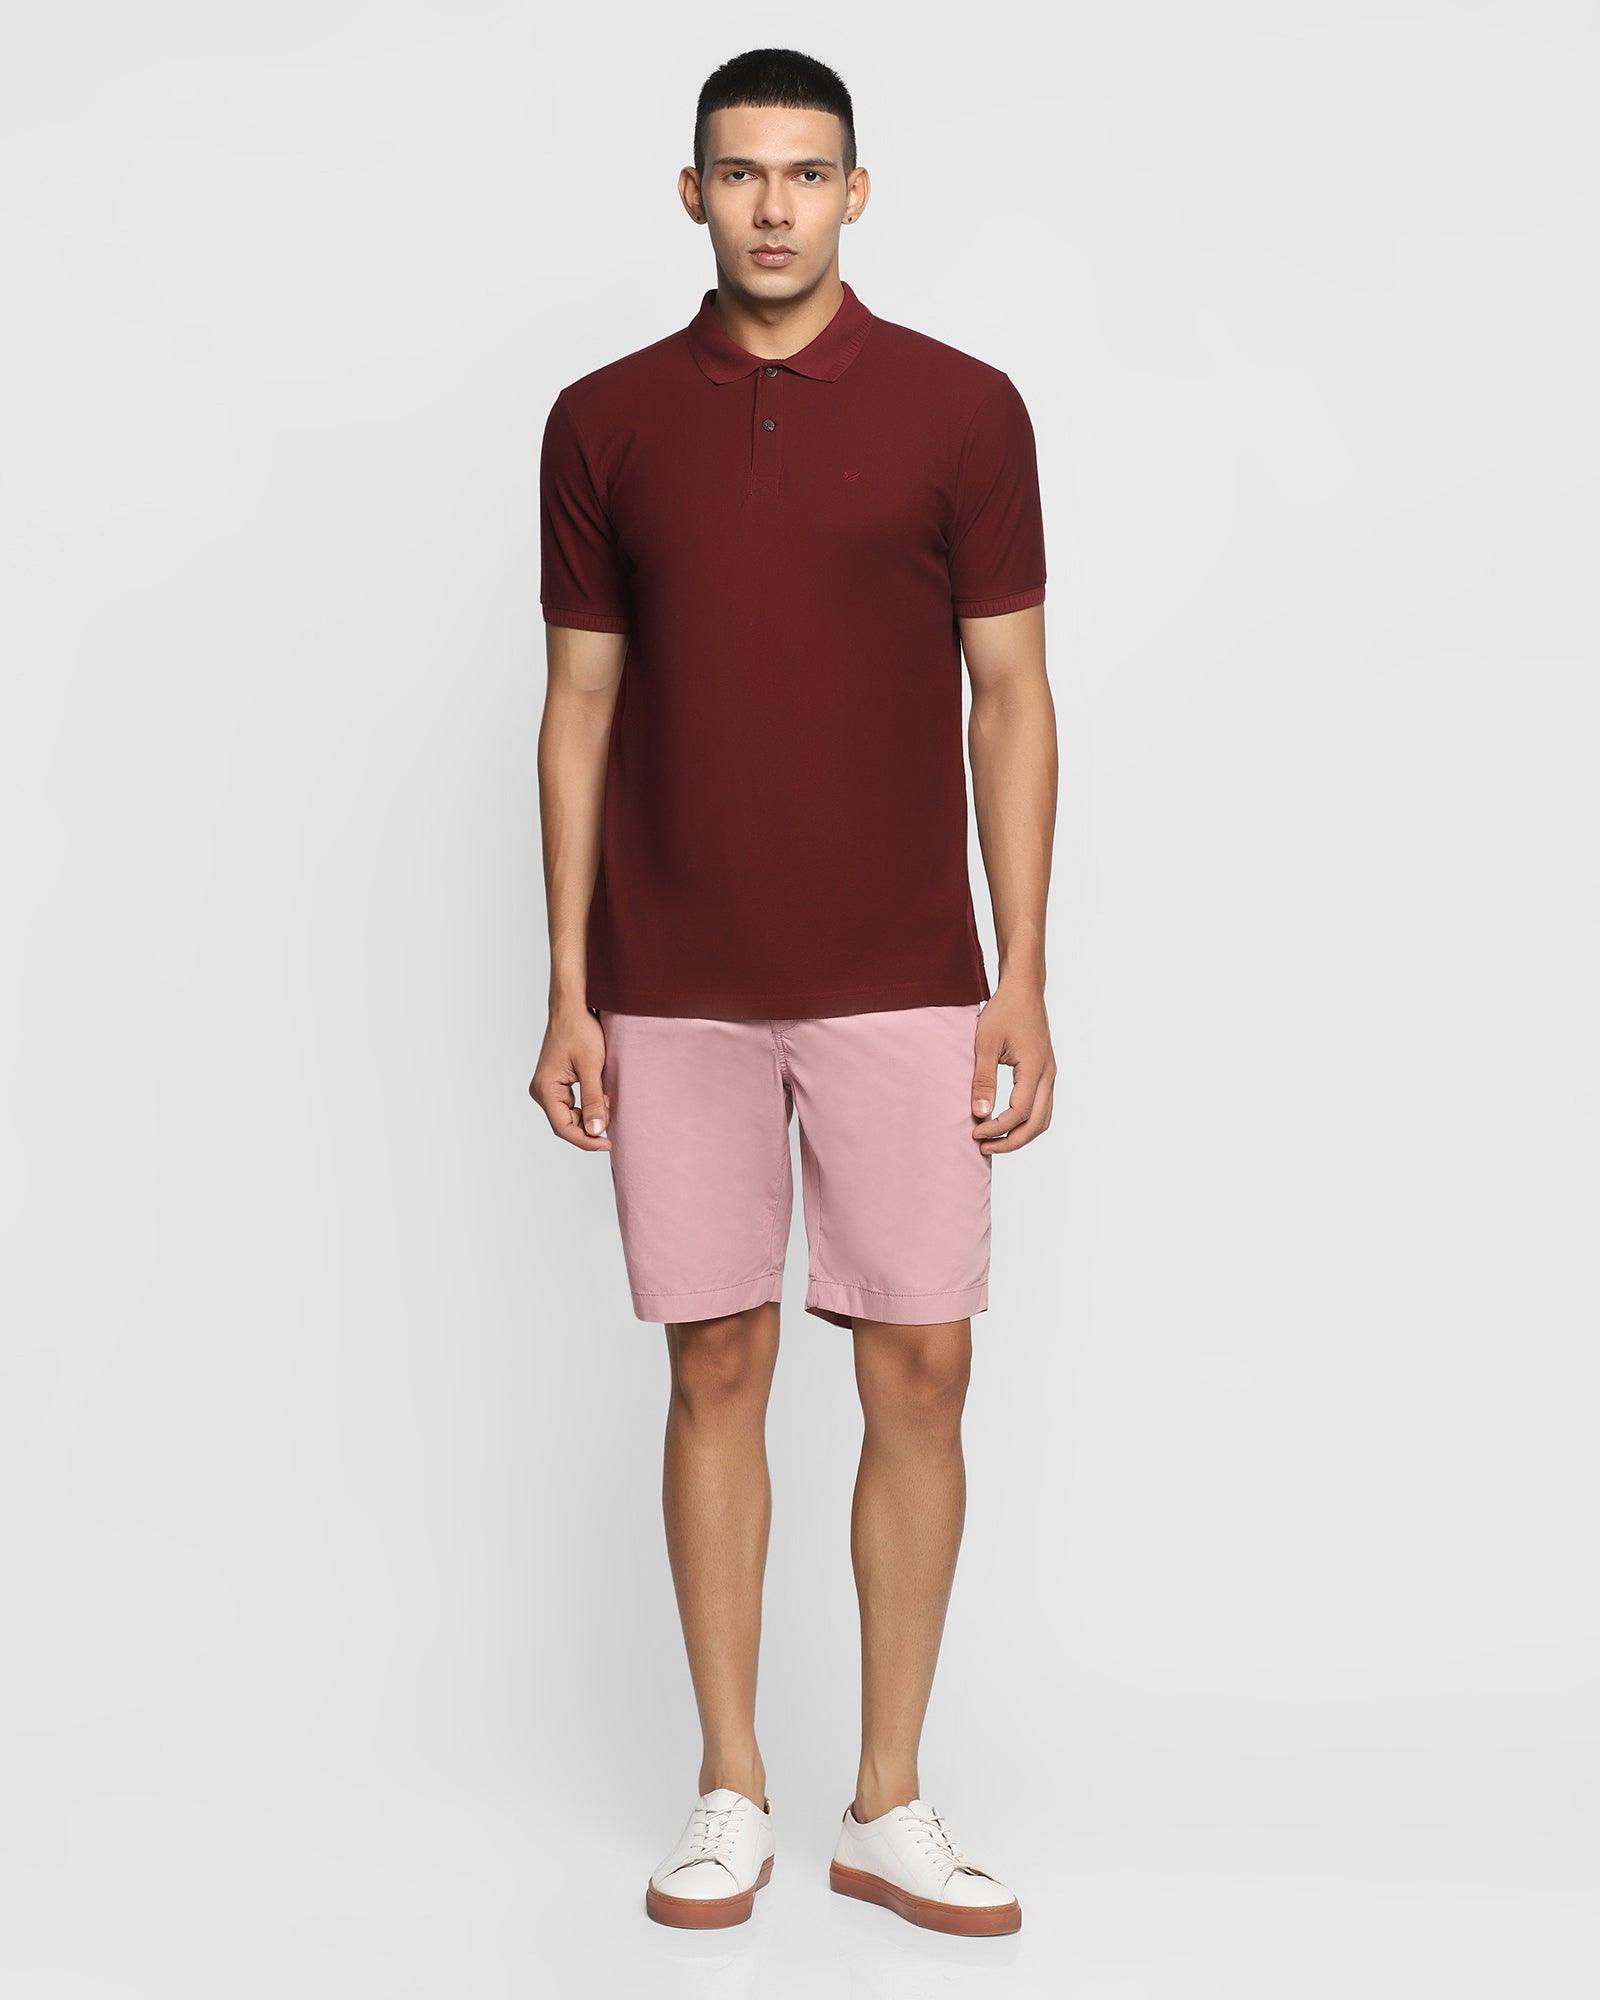 Casual Dusty Pink Solid Shorts - Indigo